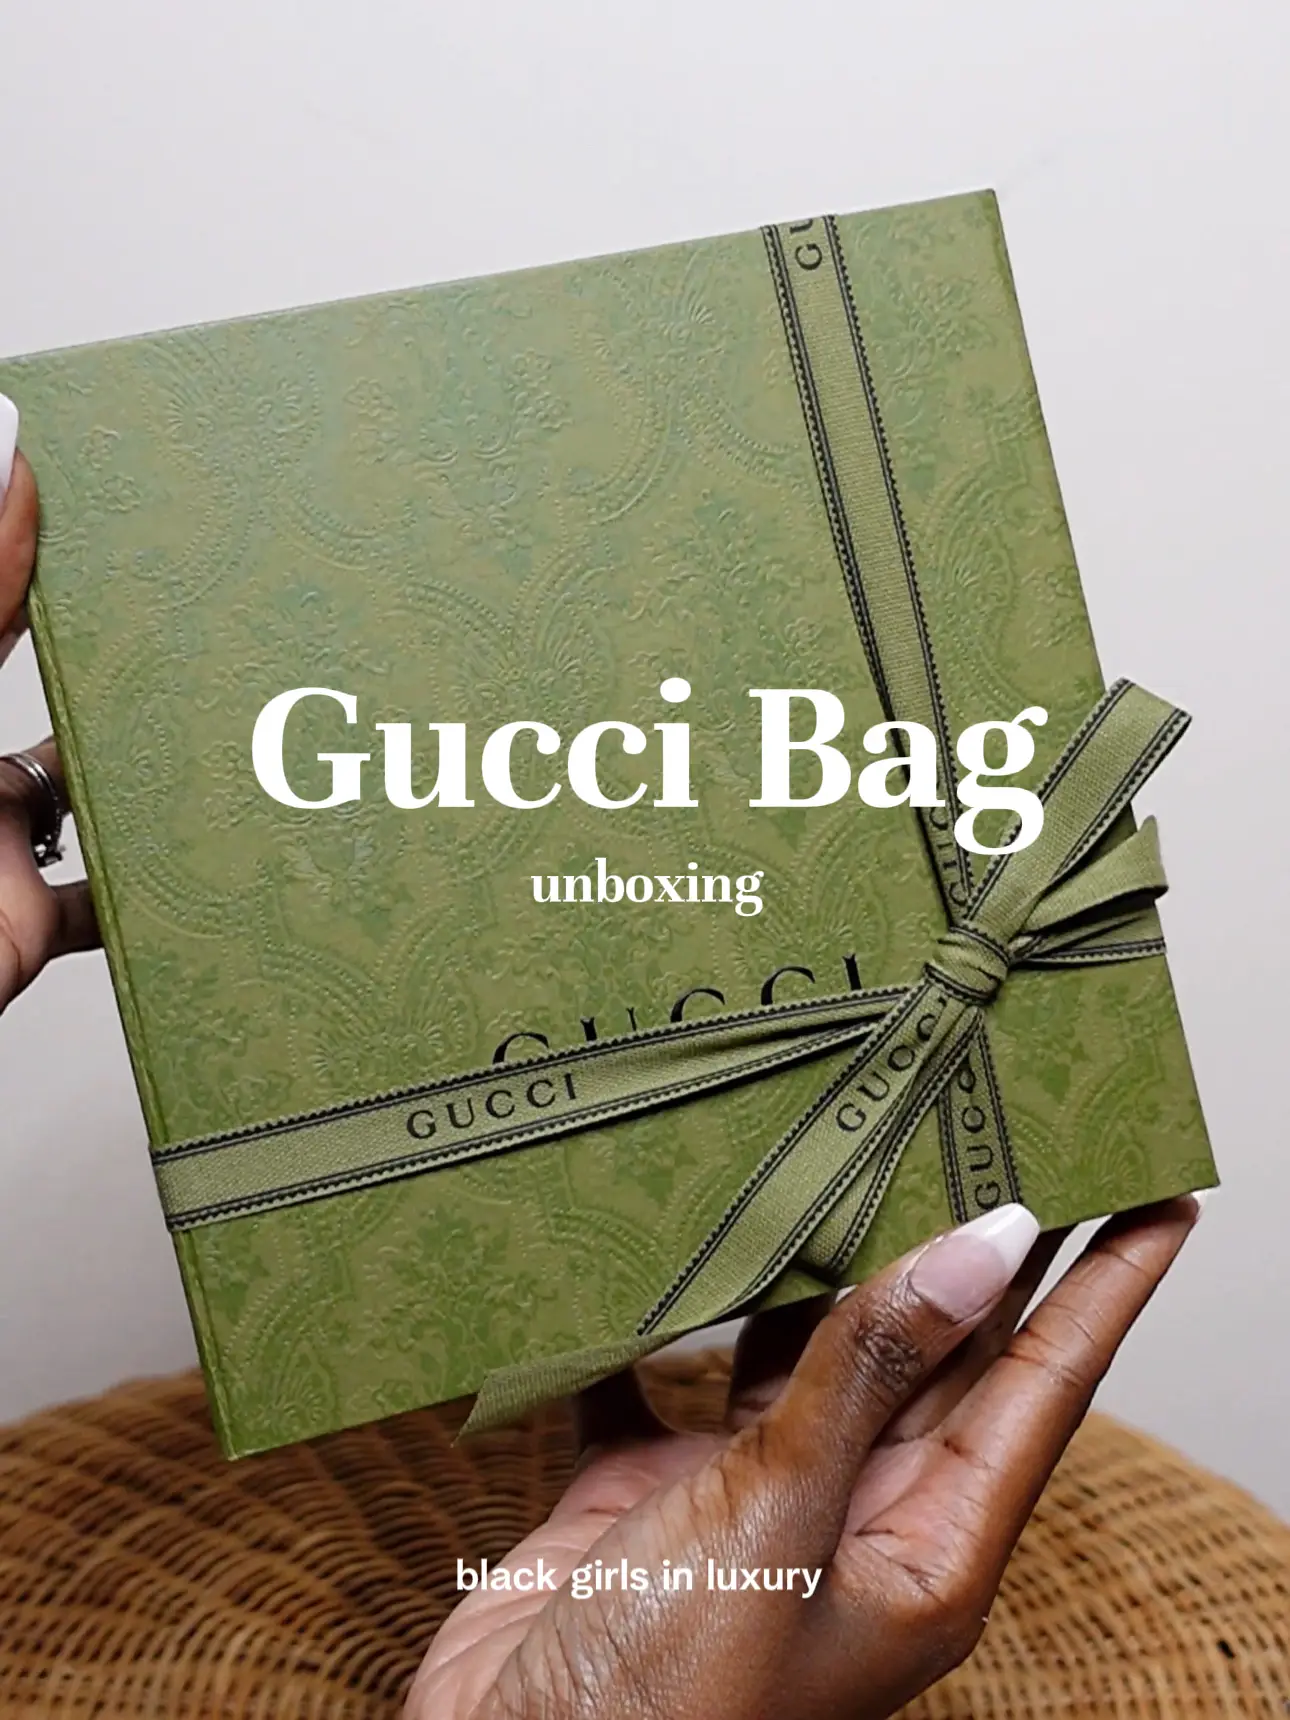 Dhgate Gucci Bag Unboxing 